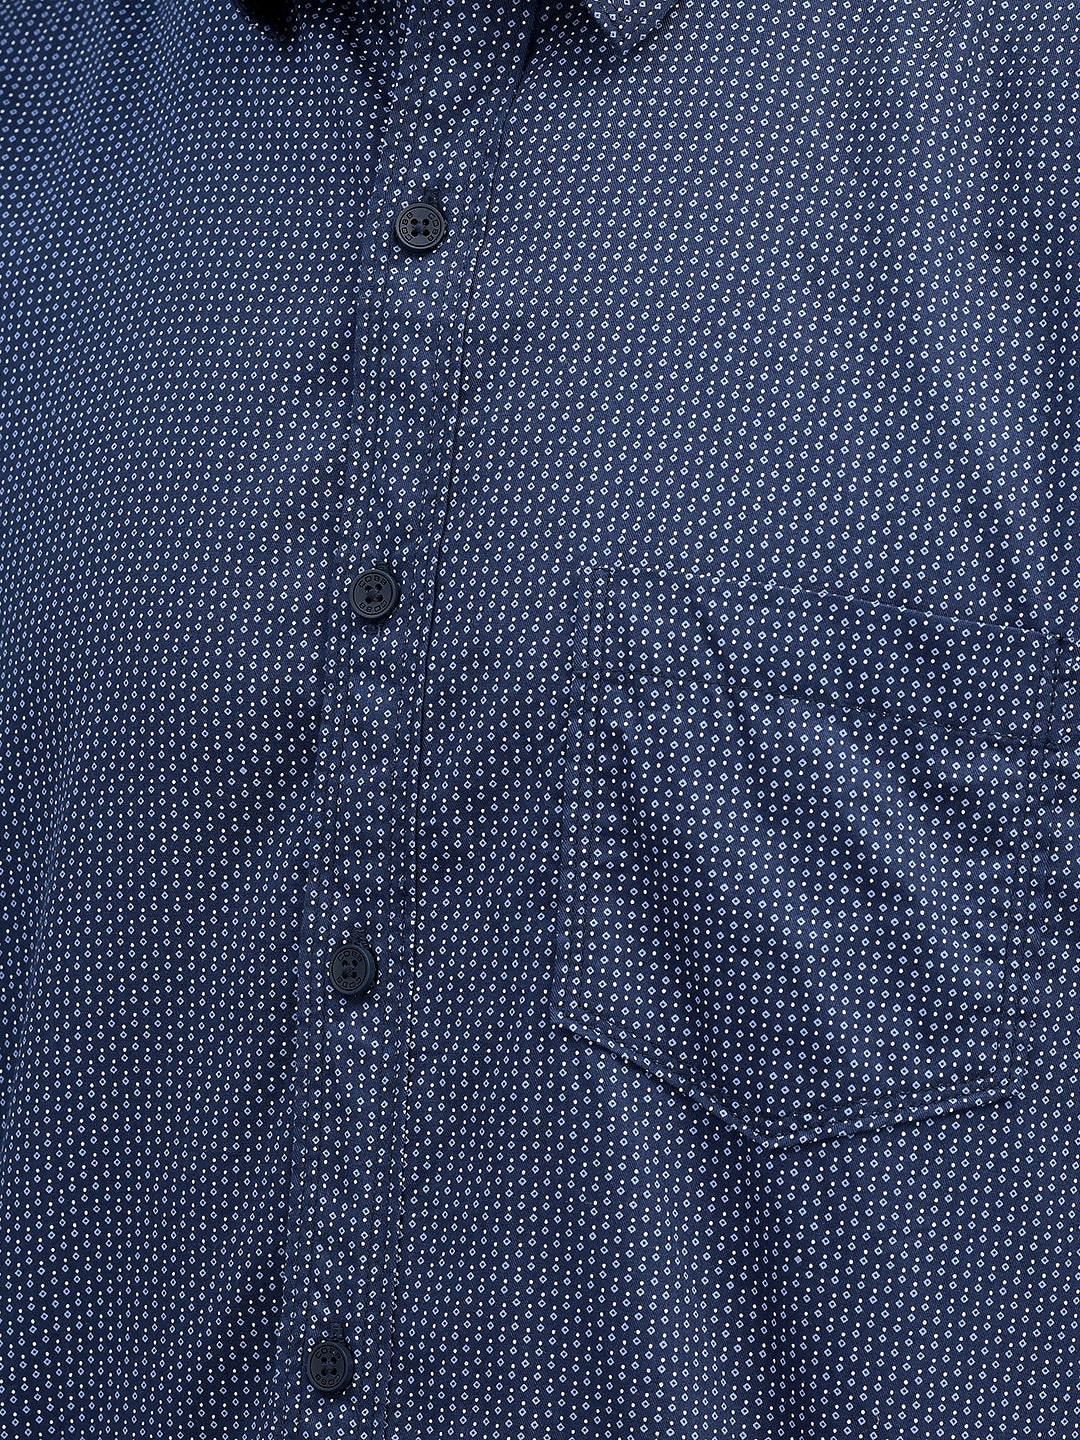 Cobb Navy Blue Printed Slim Fit Casual Shirt